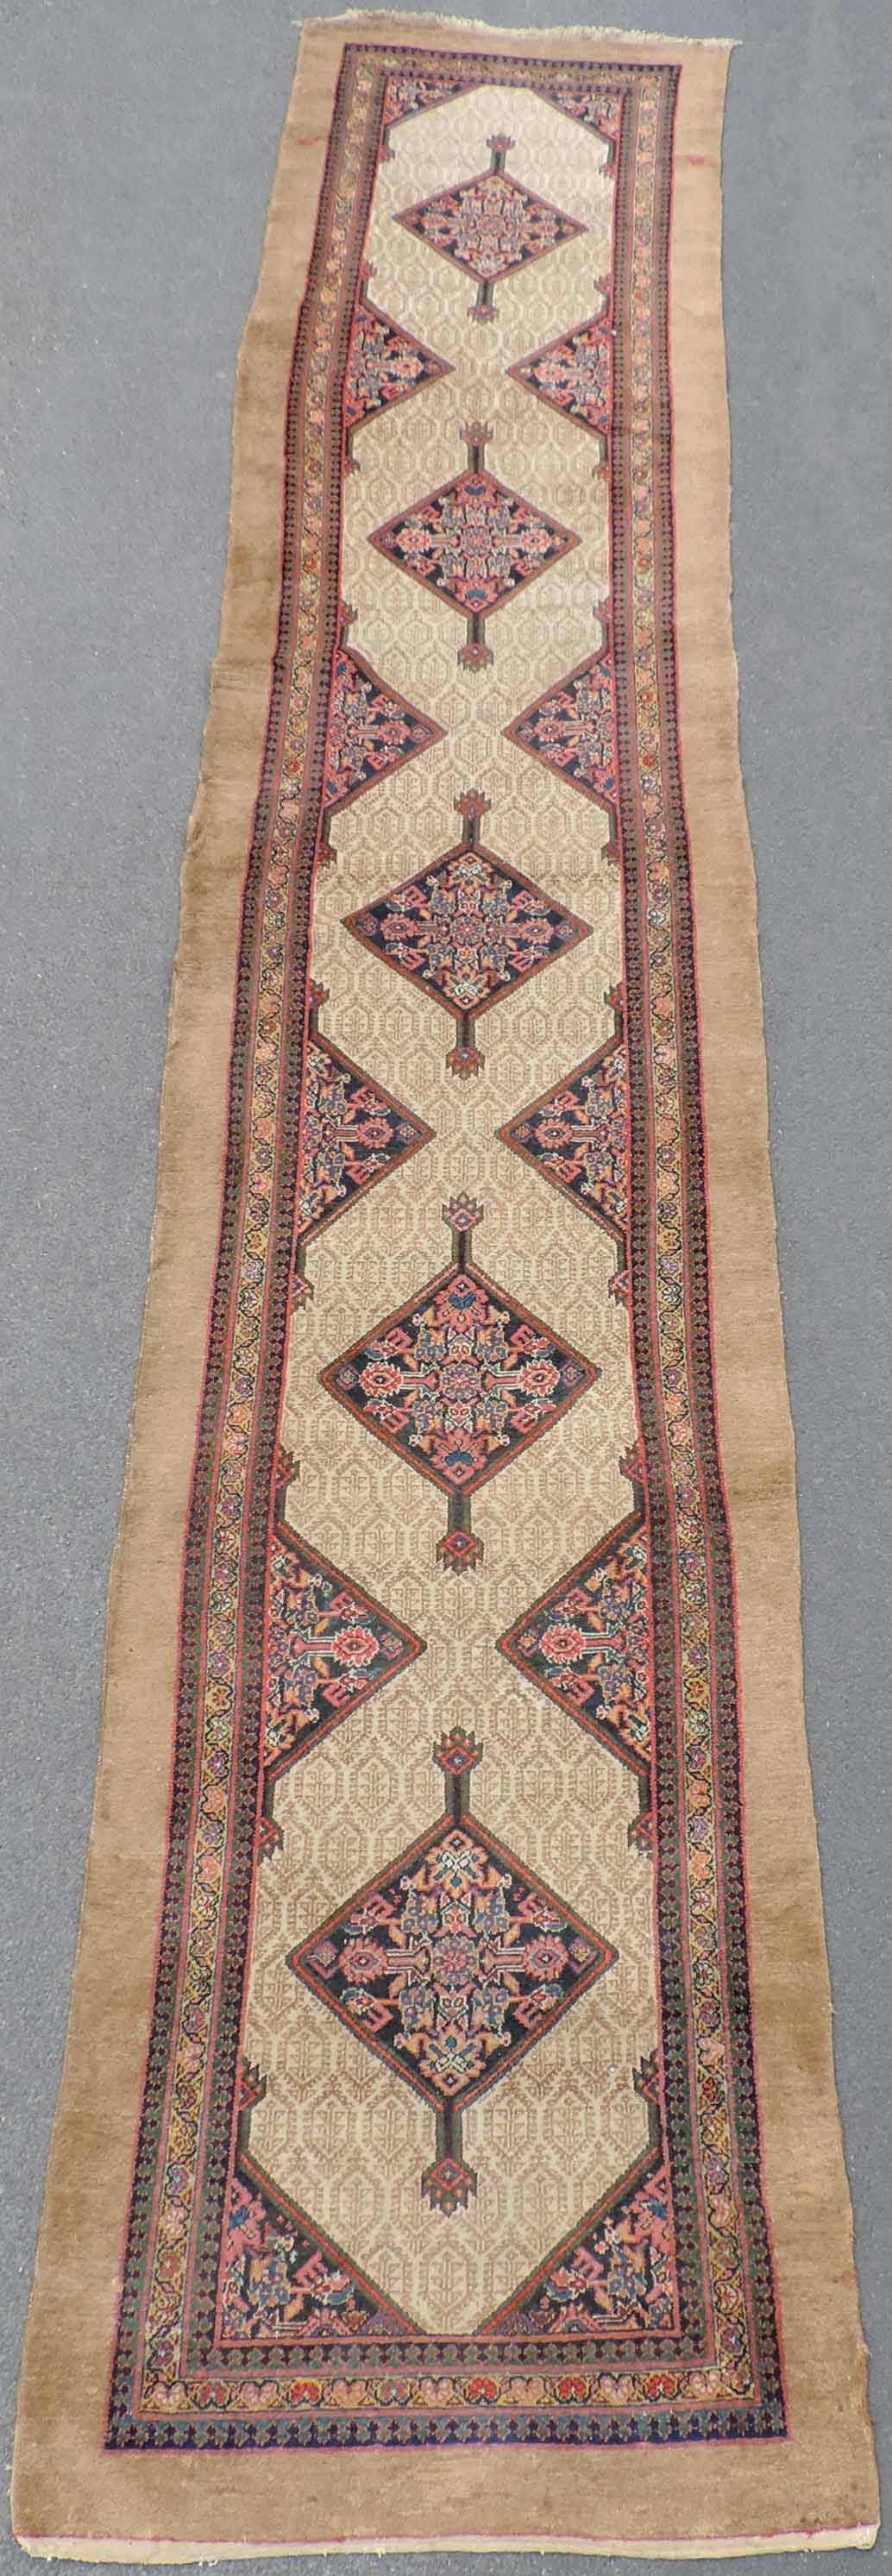 Hamadan Galerie Teppich. Iran, antik, um 1880. Multiple Medaillons.514 cm x 97 cm. Handgeknüpft.